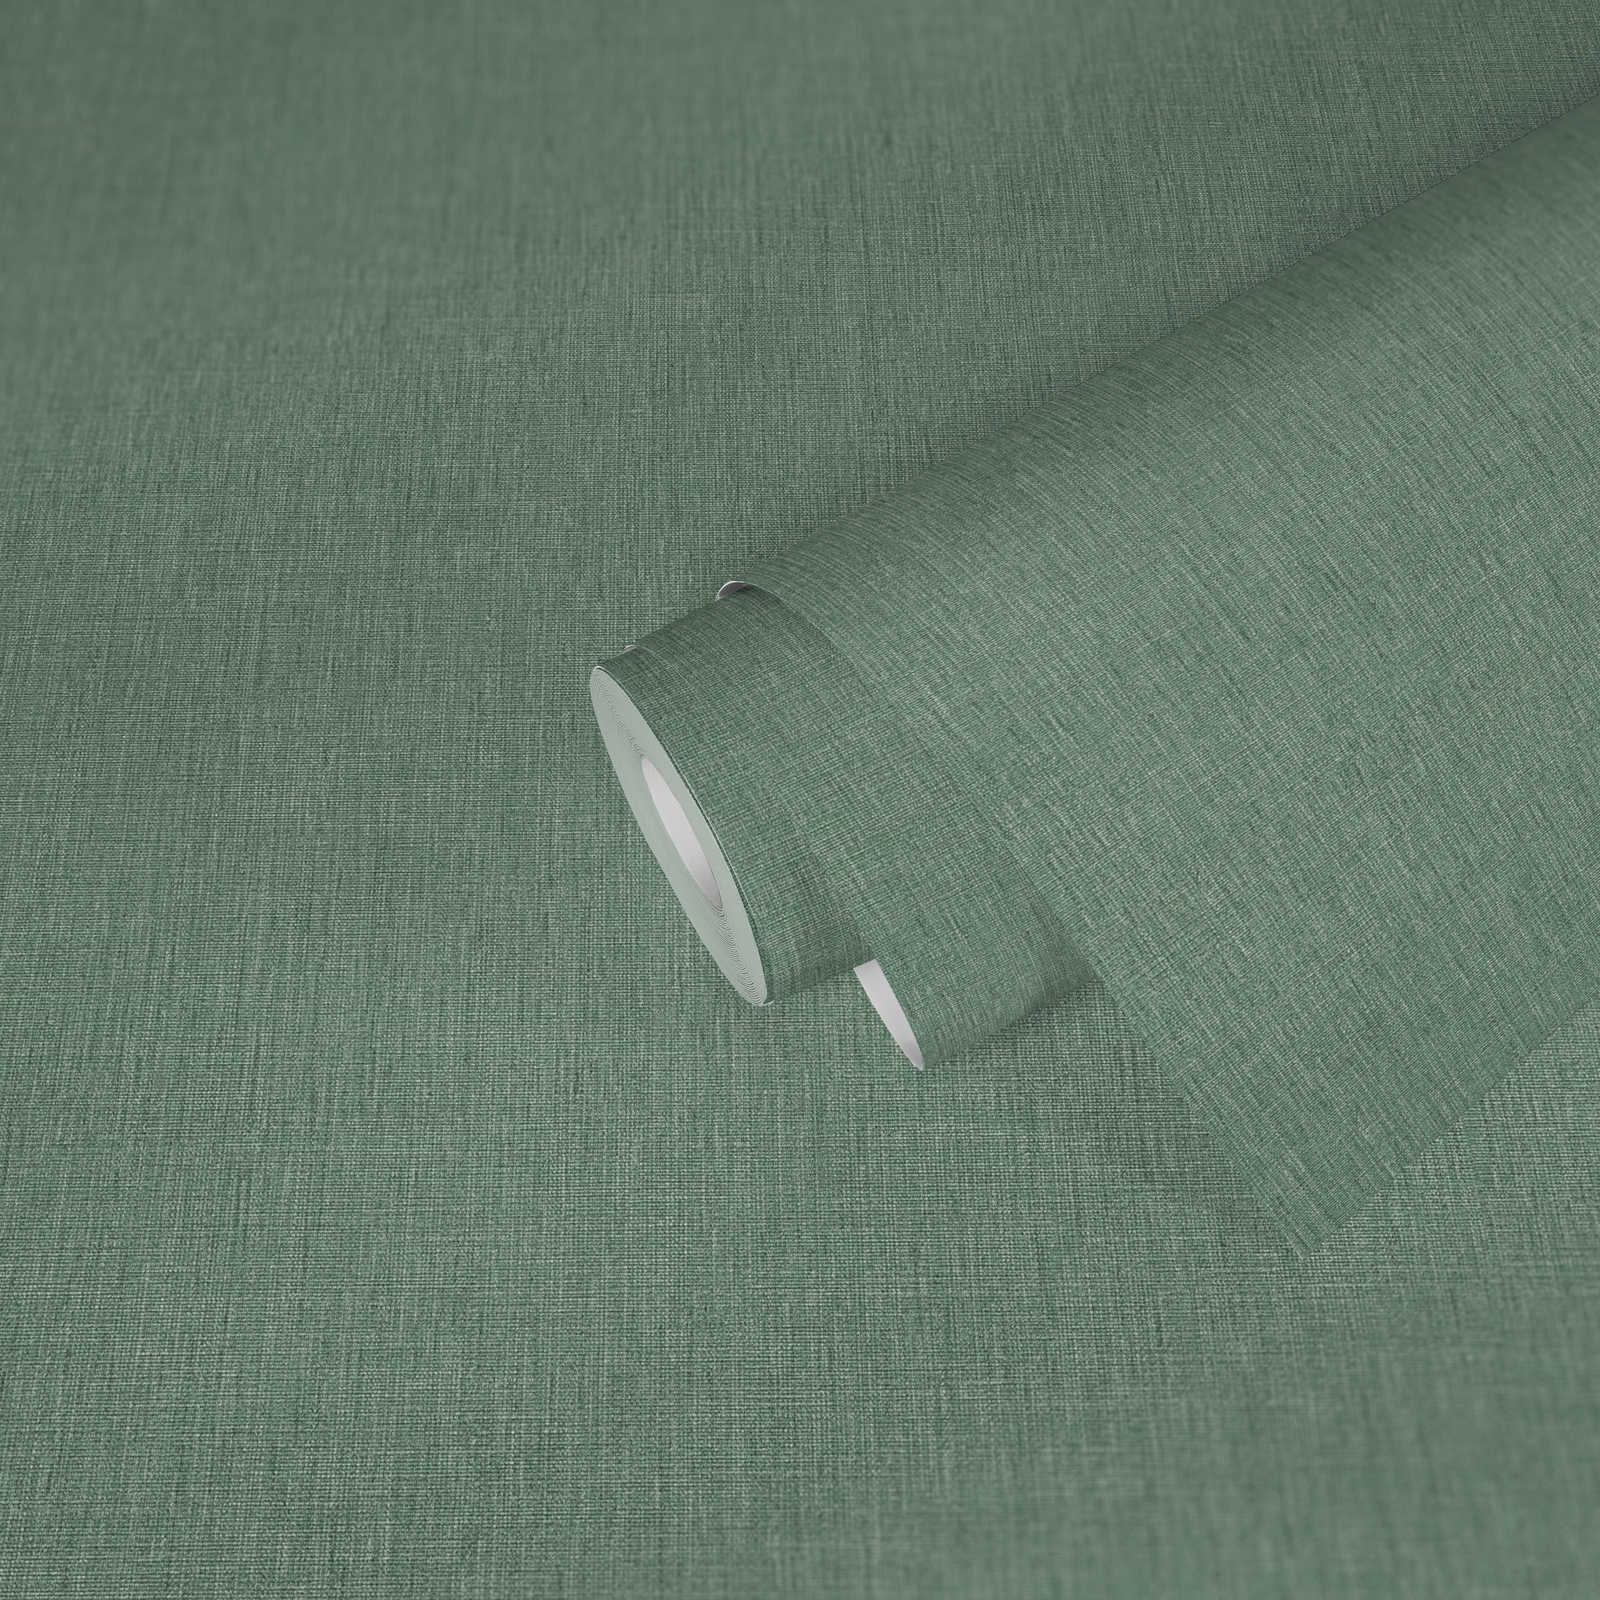             Unitapete in Textiloptik mit Struktur – Grün
        